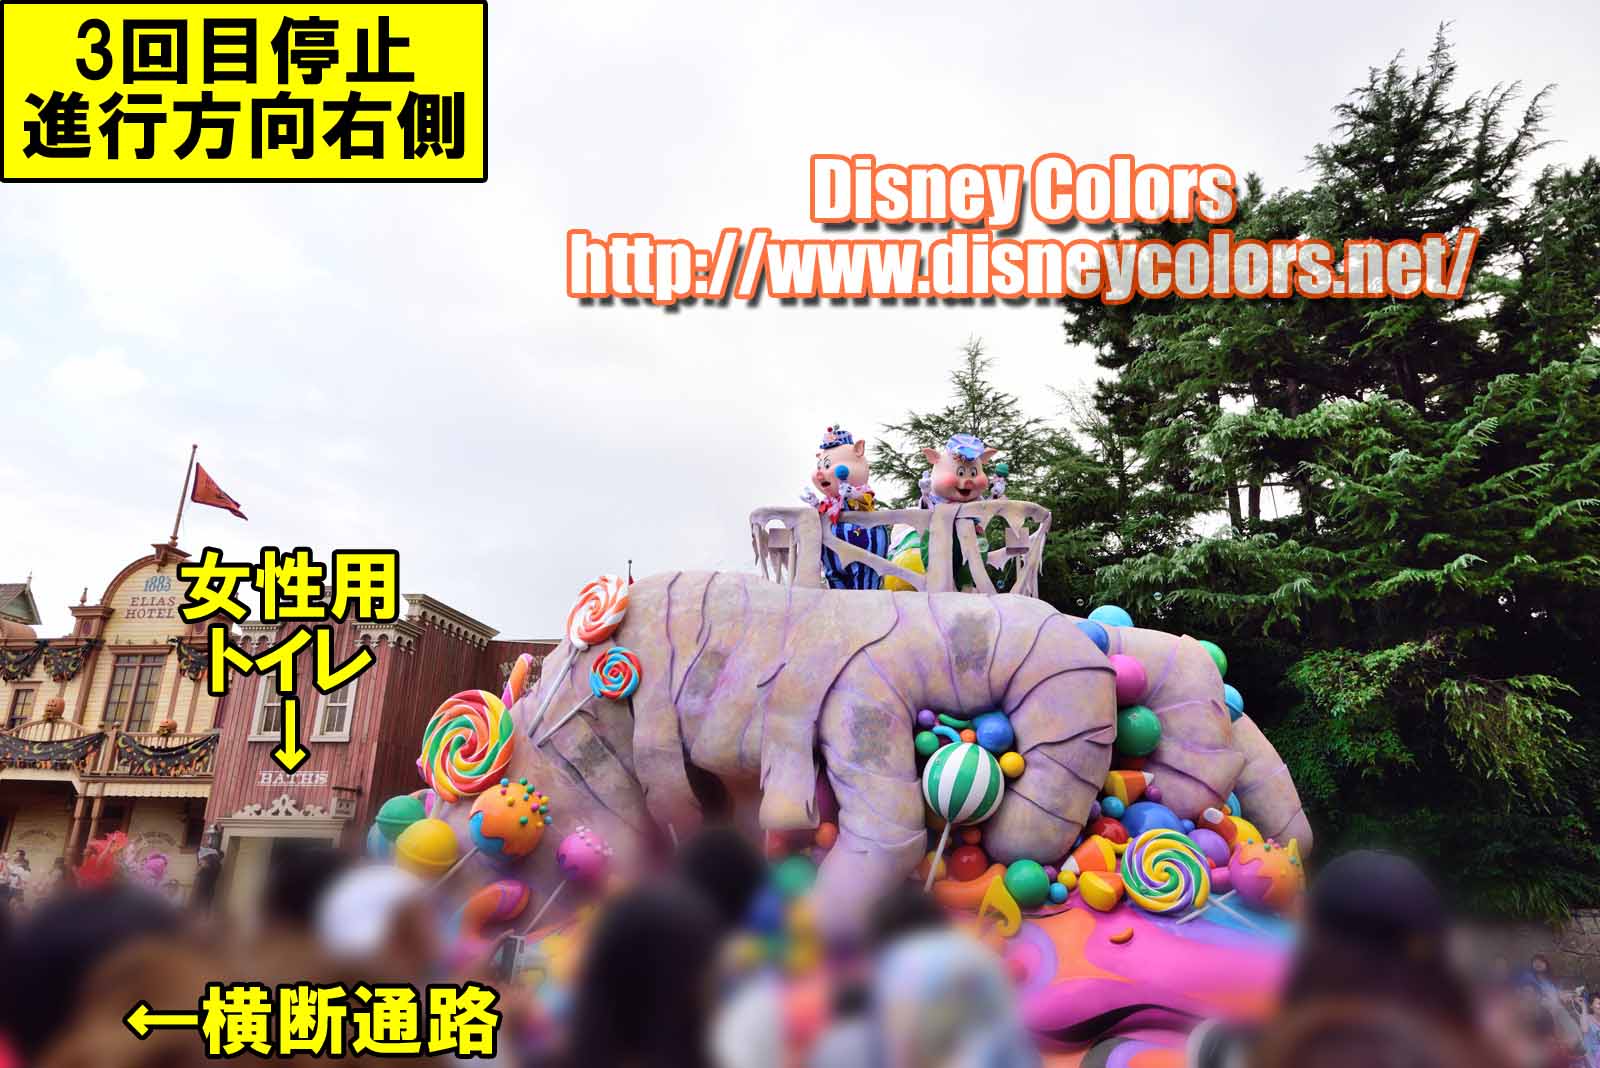 Tdl ハロウィーン ポップンライブ16 フロート停止位置 鑑賞ガイド Disney Colors Event Guide